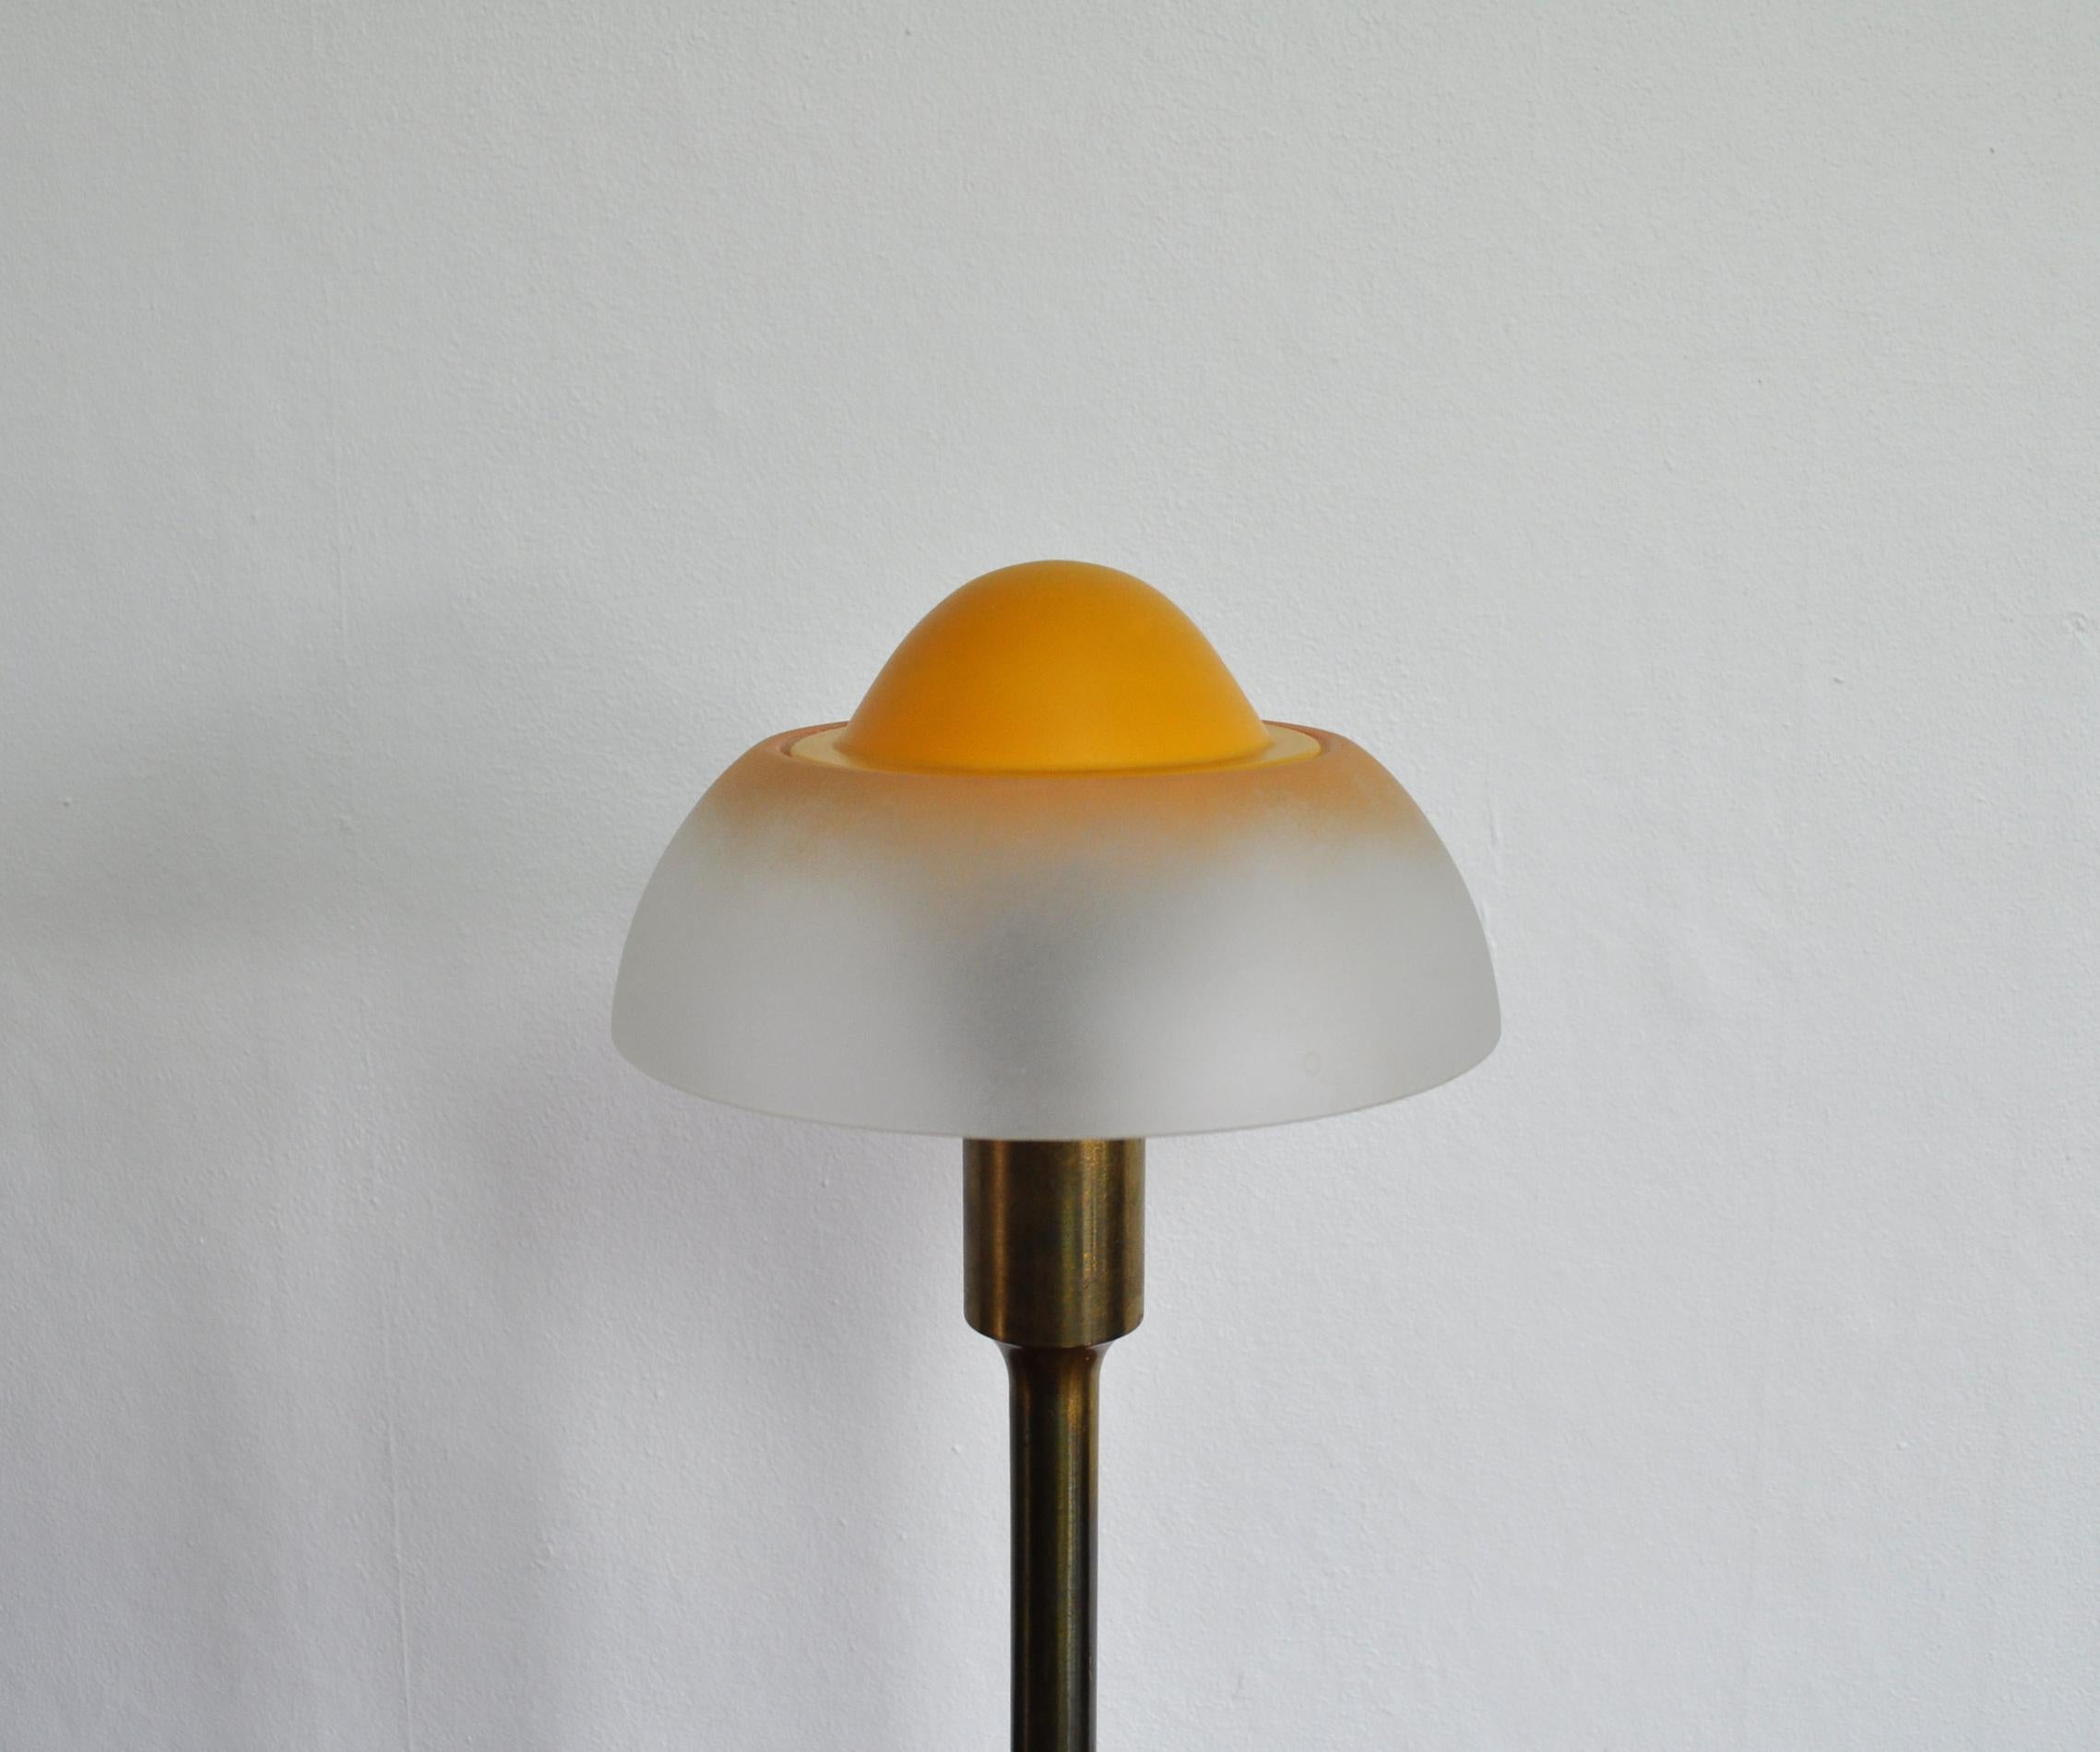 20th Century Danish Art Deco Table Lamp 'Fried Egg' by Fog & M�ørup, 1930s